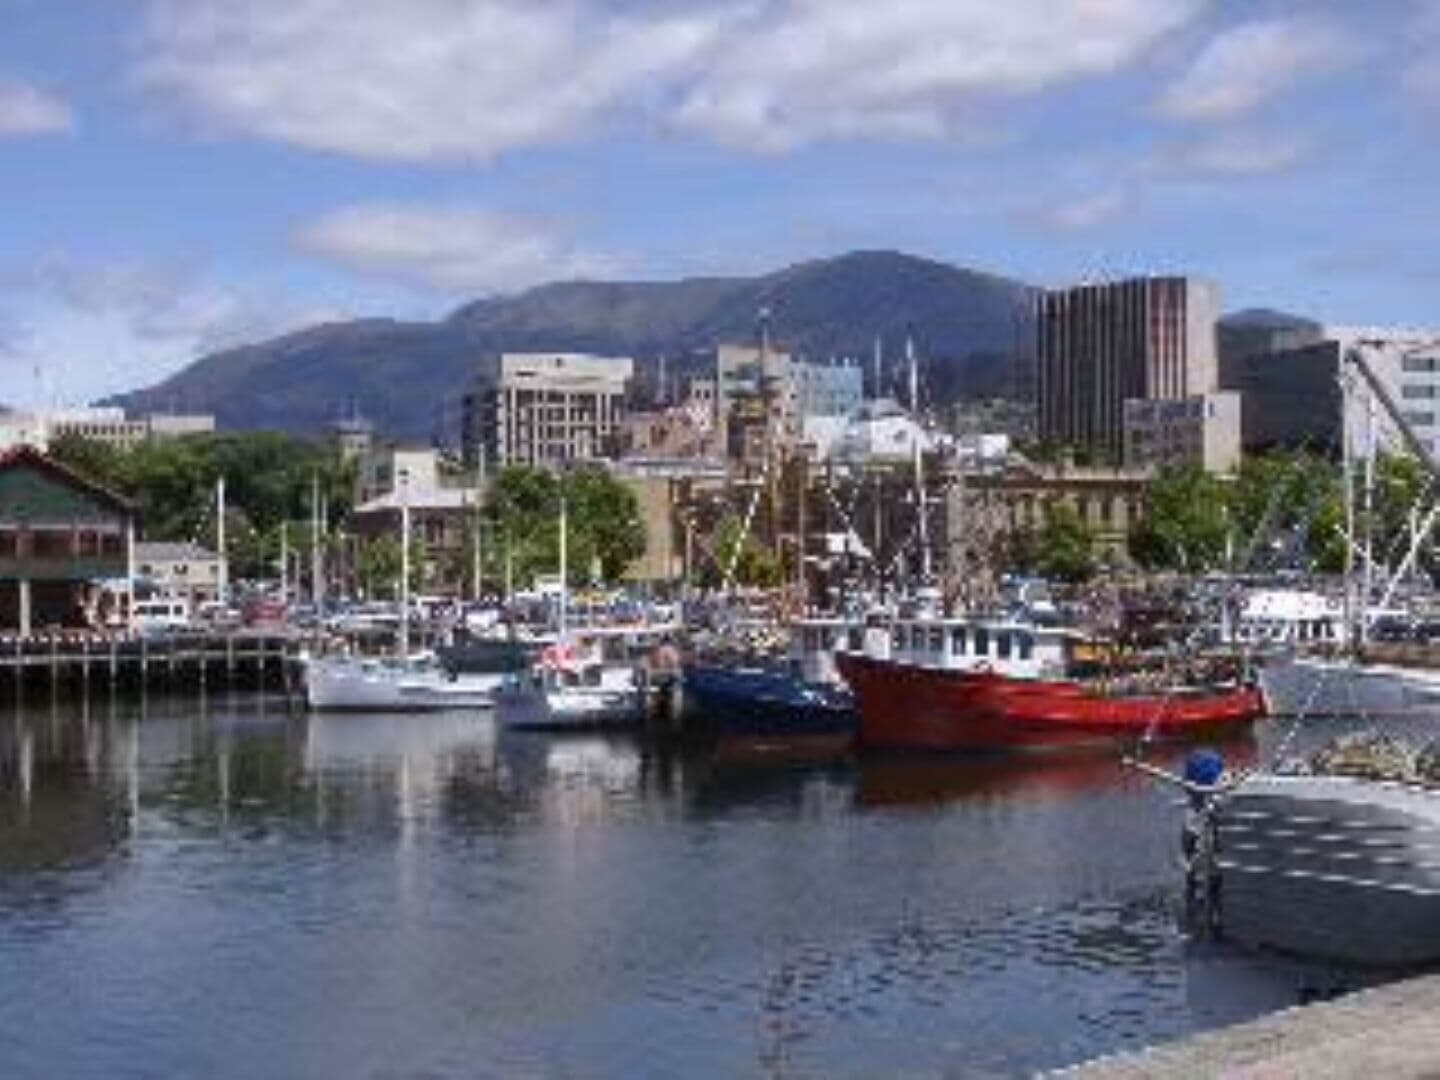 Hobart photo